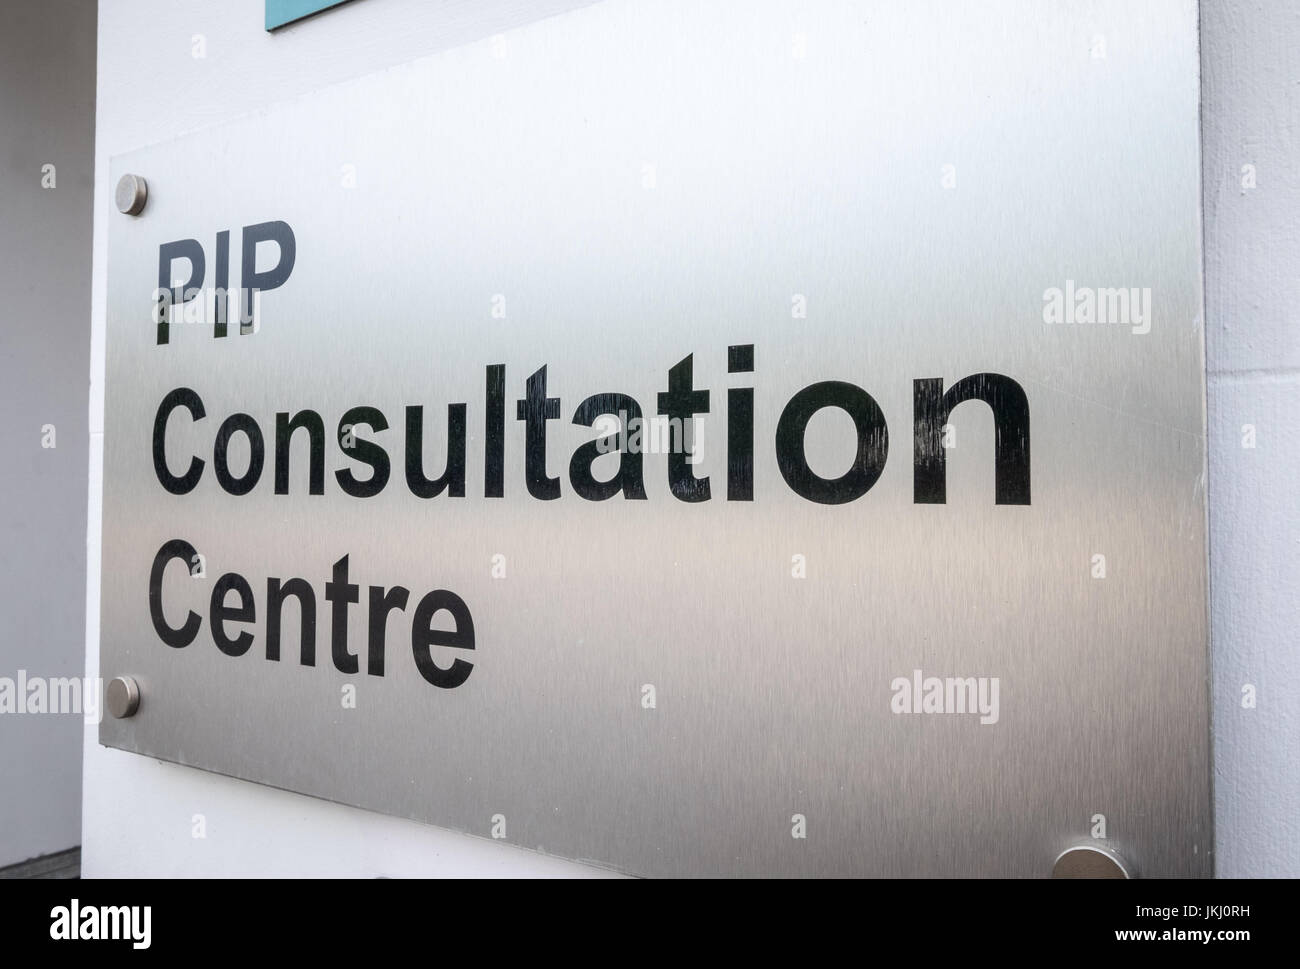 PIP ( independencia personal pagos ) Centro de Consulta, Southampton, Hampshire, Reino Unido Foto de stock